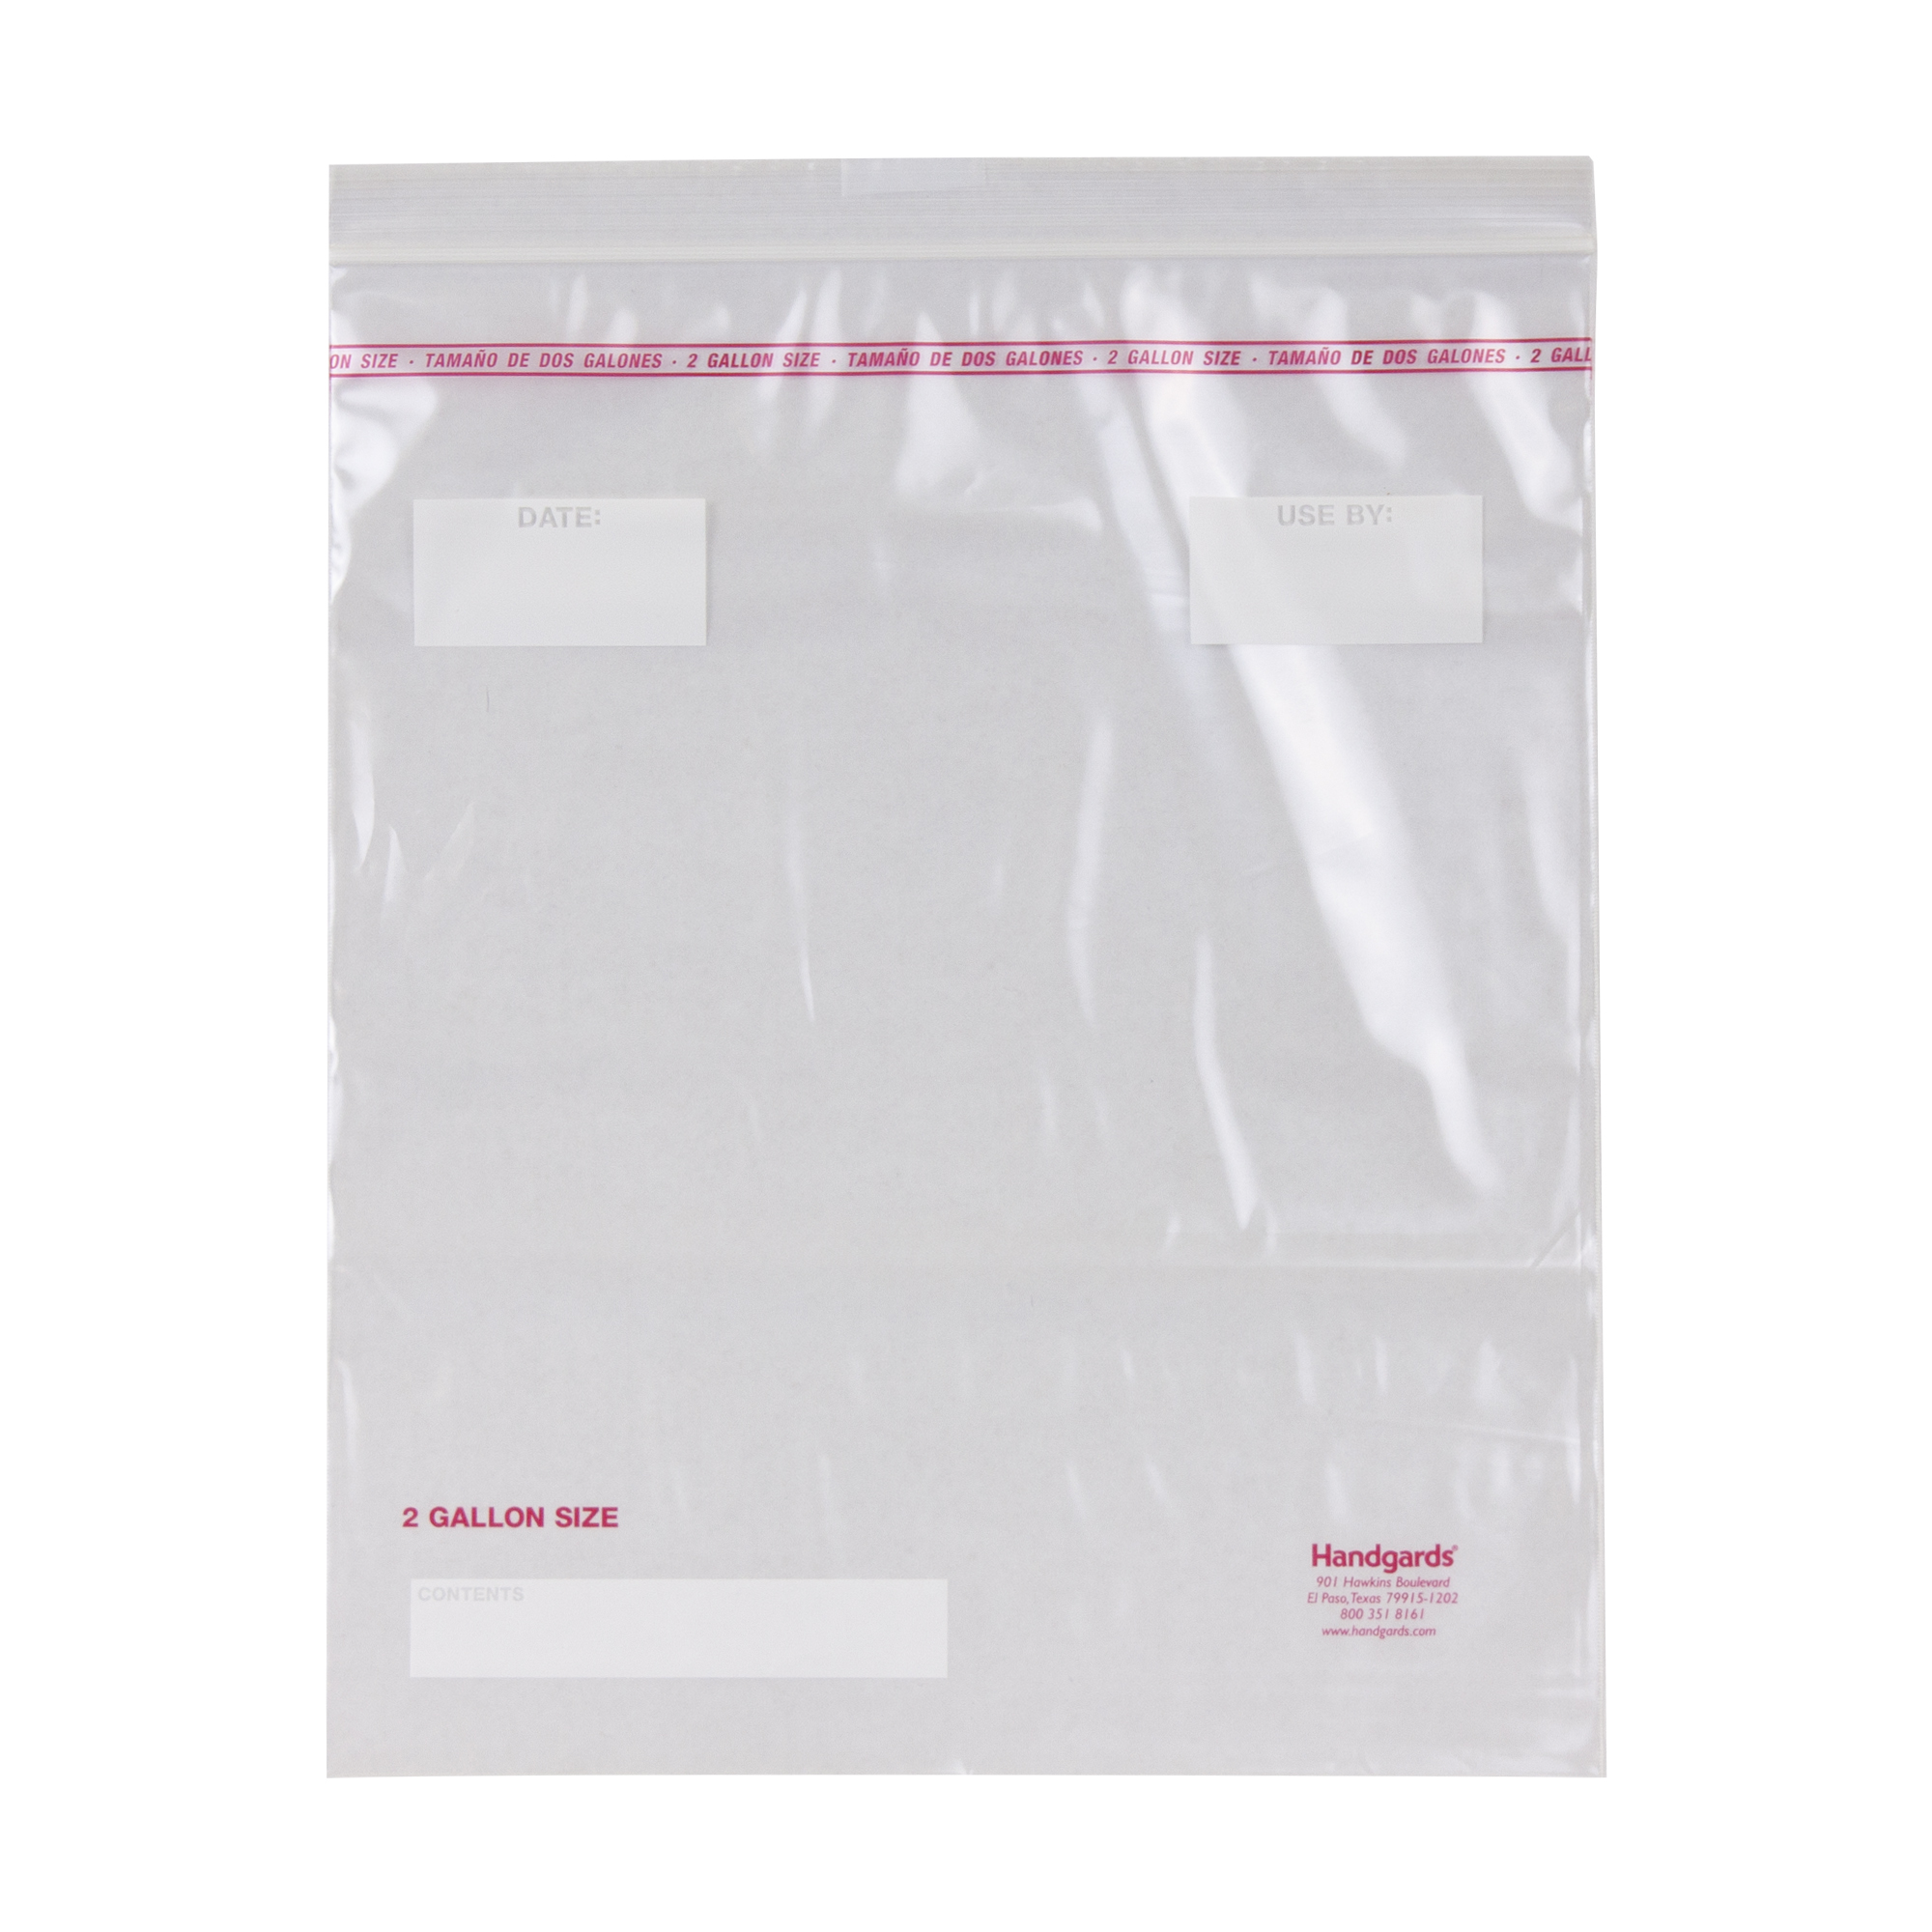 Zipgards® Low Density Freezer Reclosable Disposable Bags – Quart Size –  Handgards®